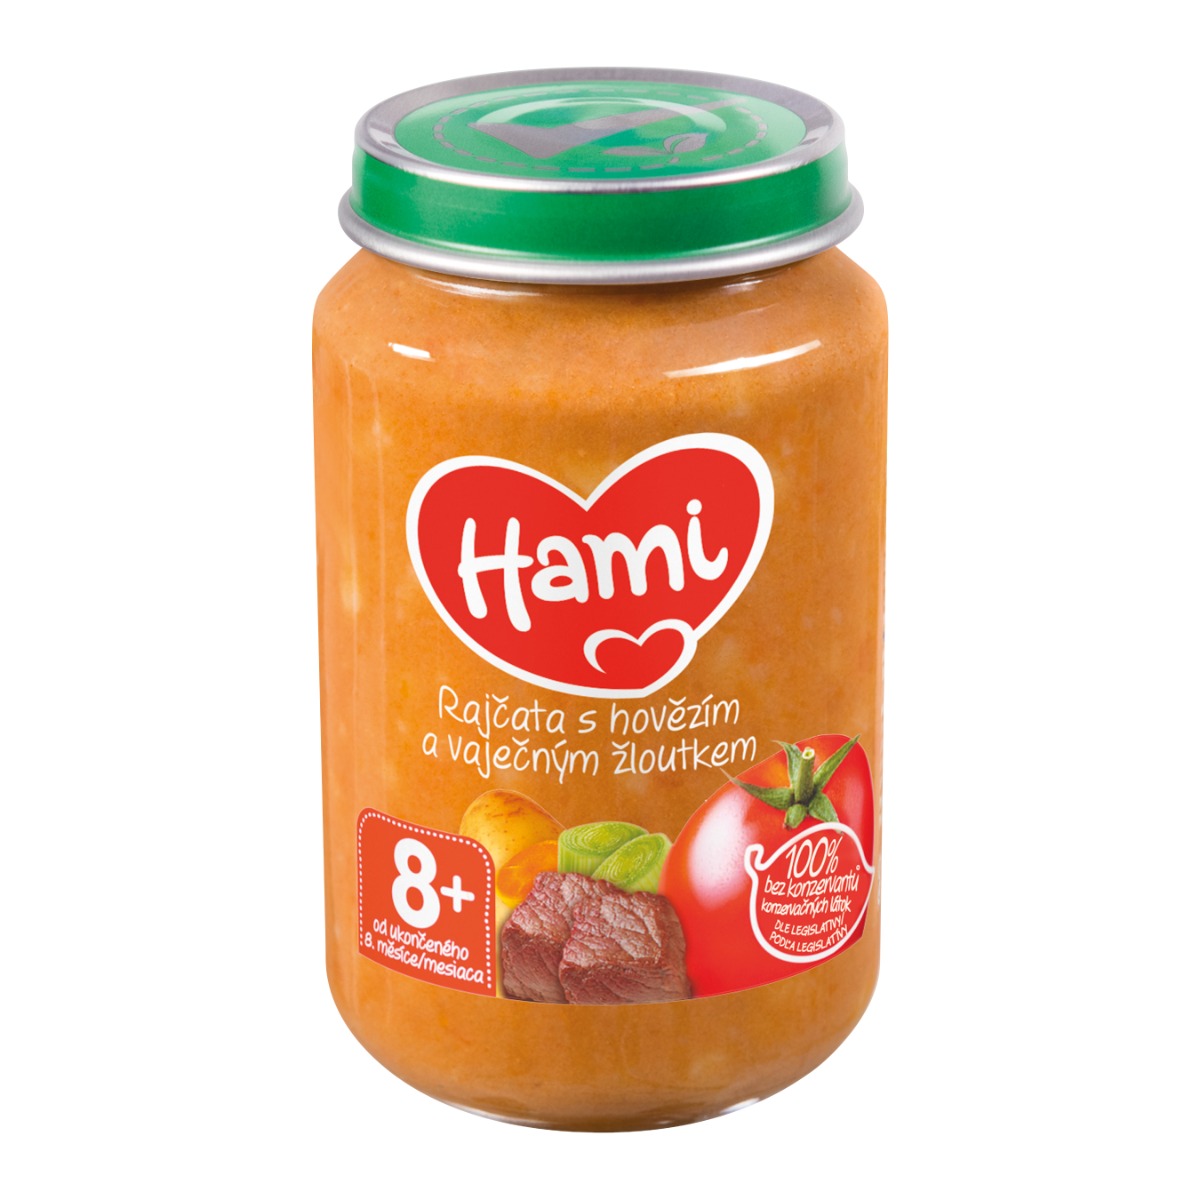 Hami Rajčata s hovězím a vaječným žloutkem 8+ 200 g Hami